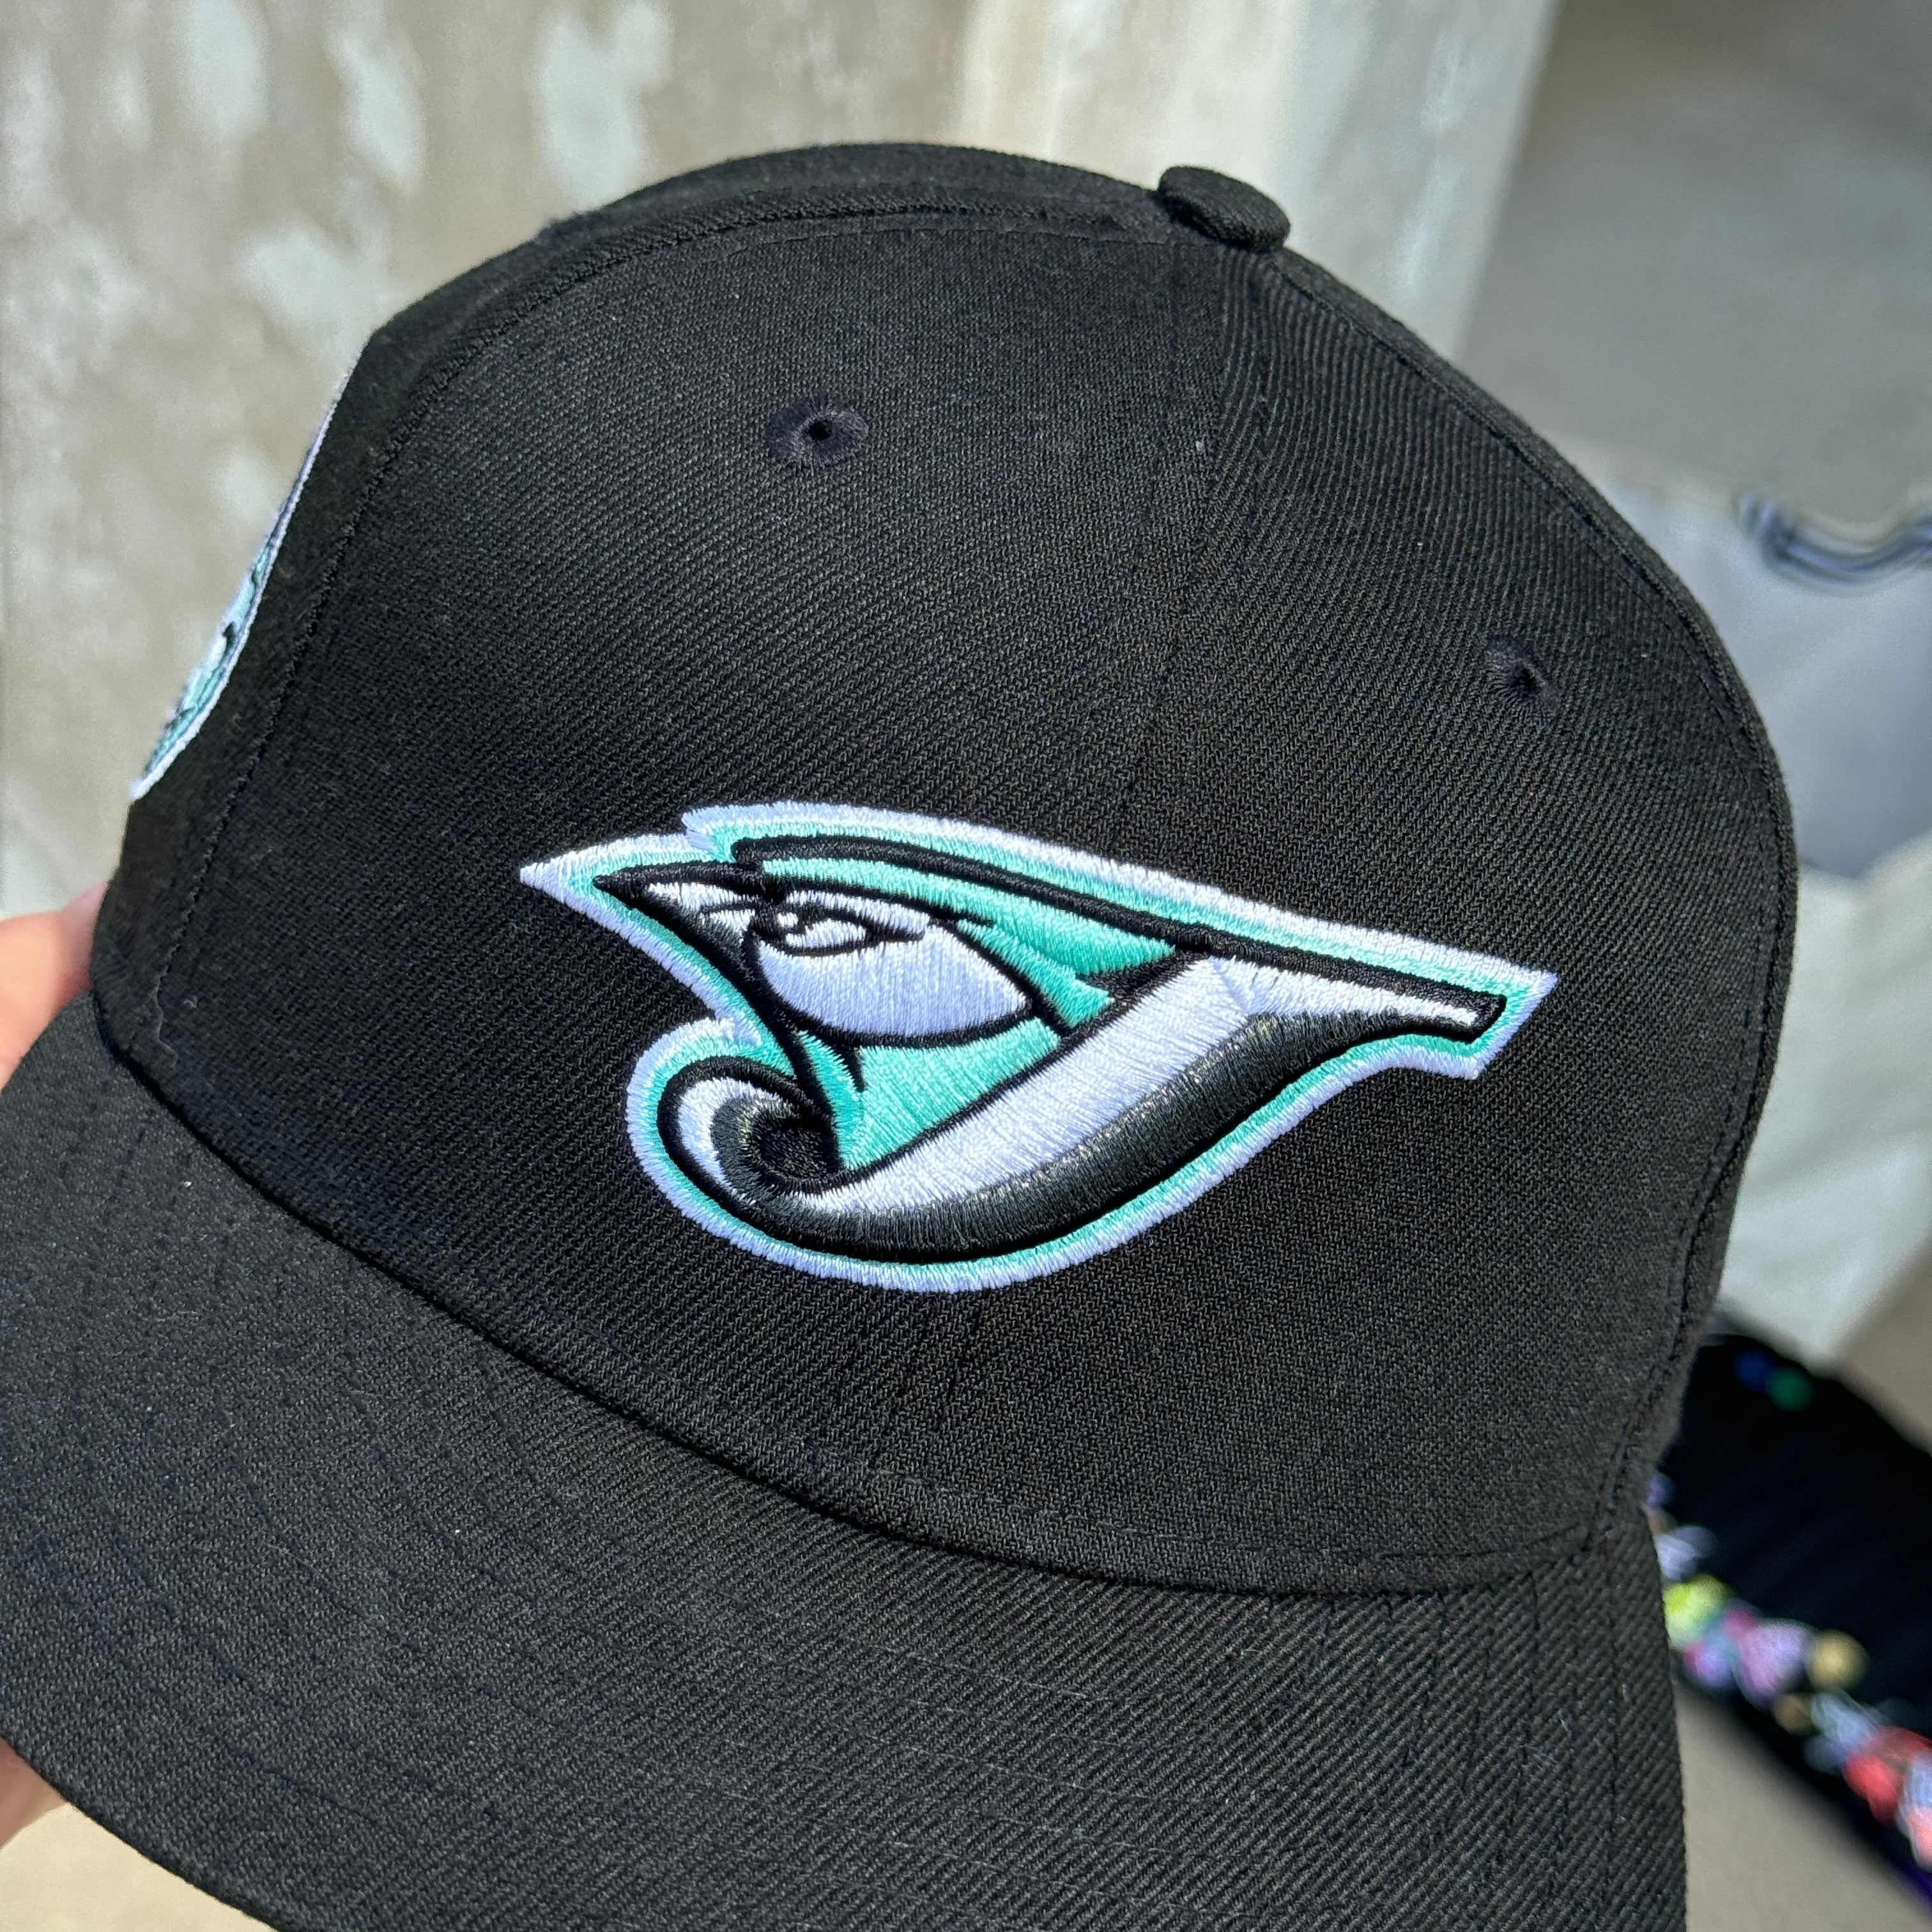 USED 7 Black Toronto Blue Jays 30th Season 59fifty New Era Fitted Hat Cap